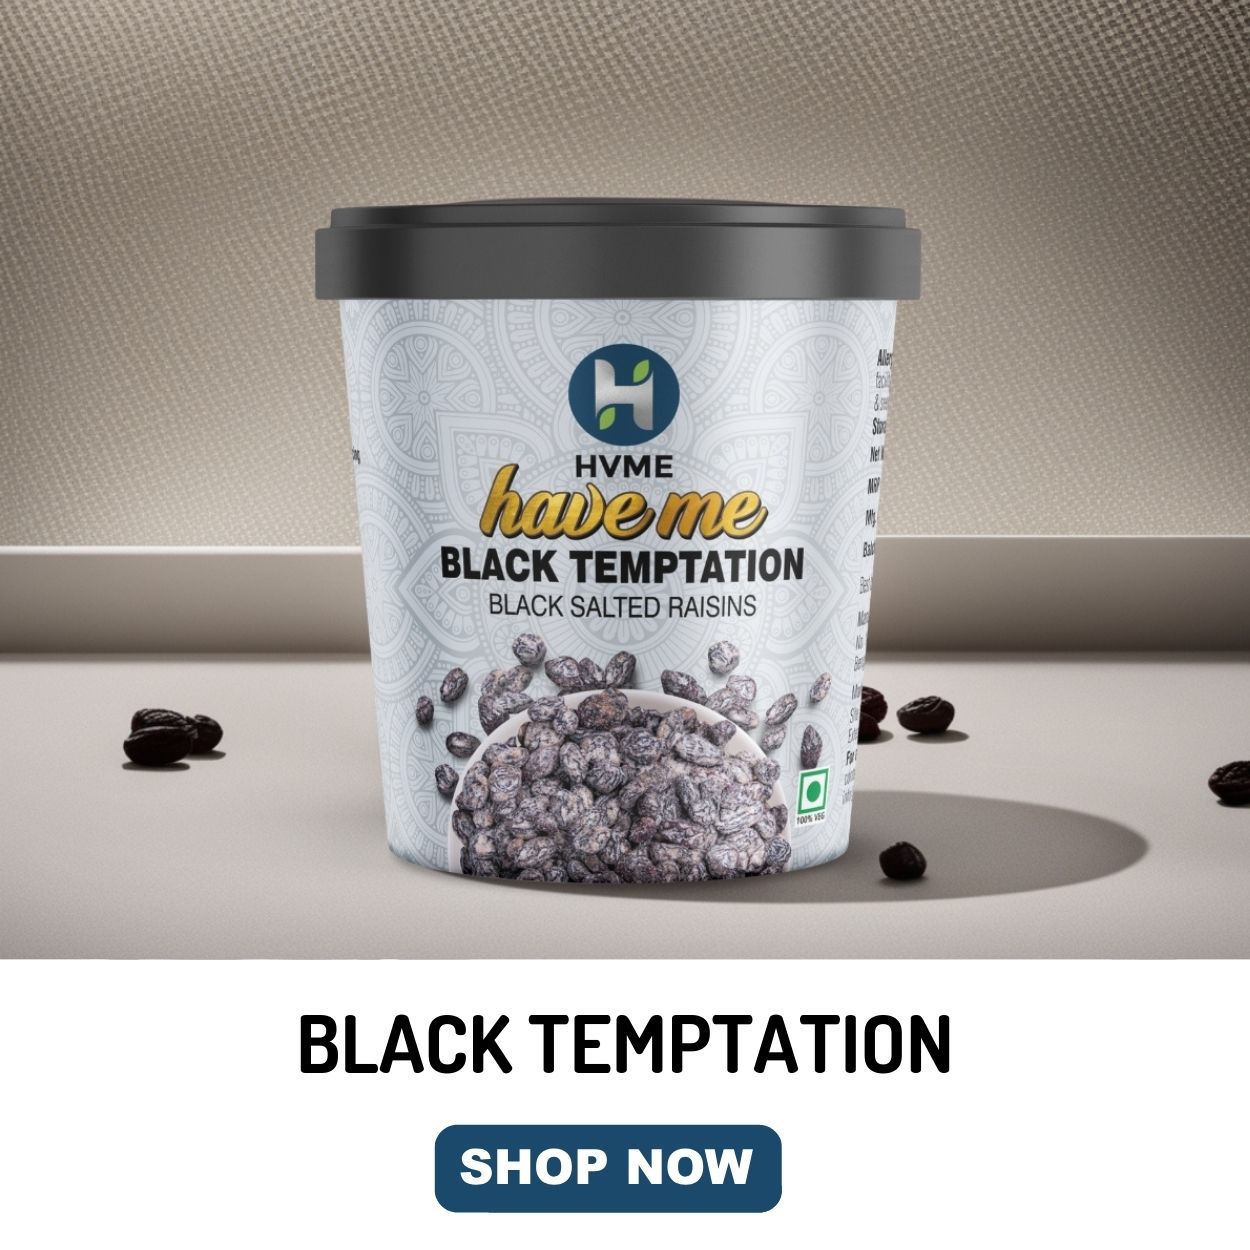 Black Temptations